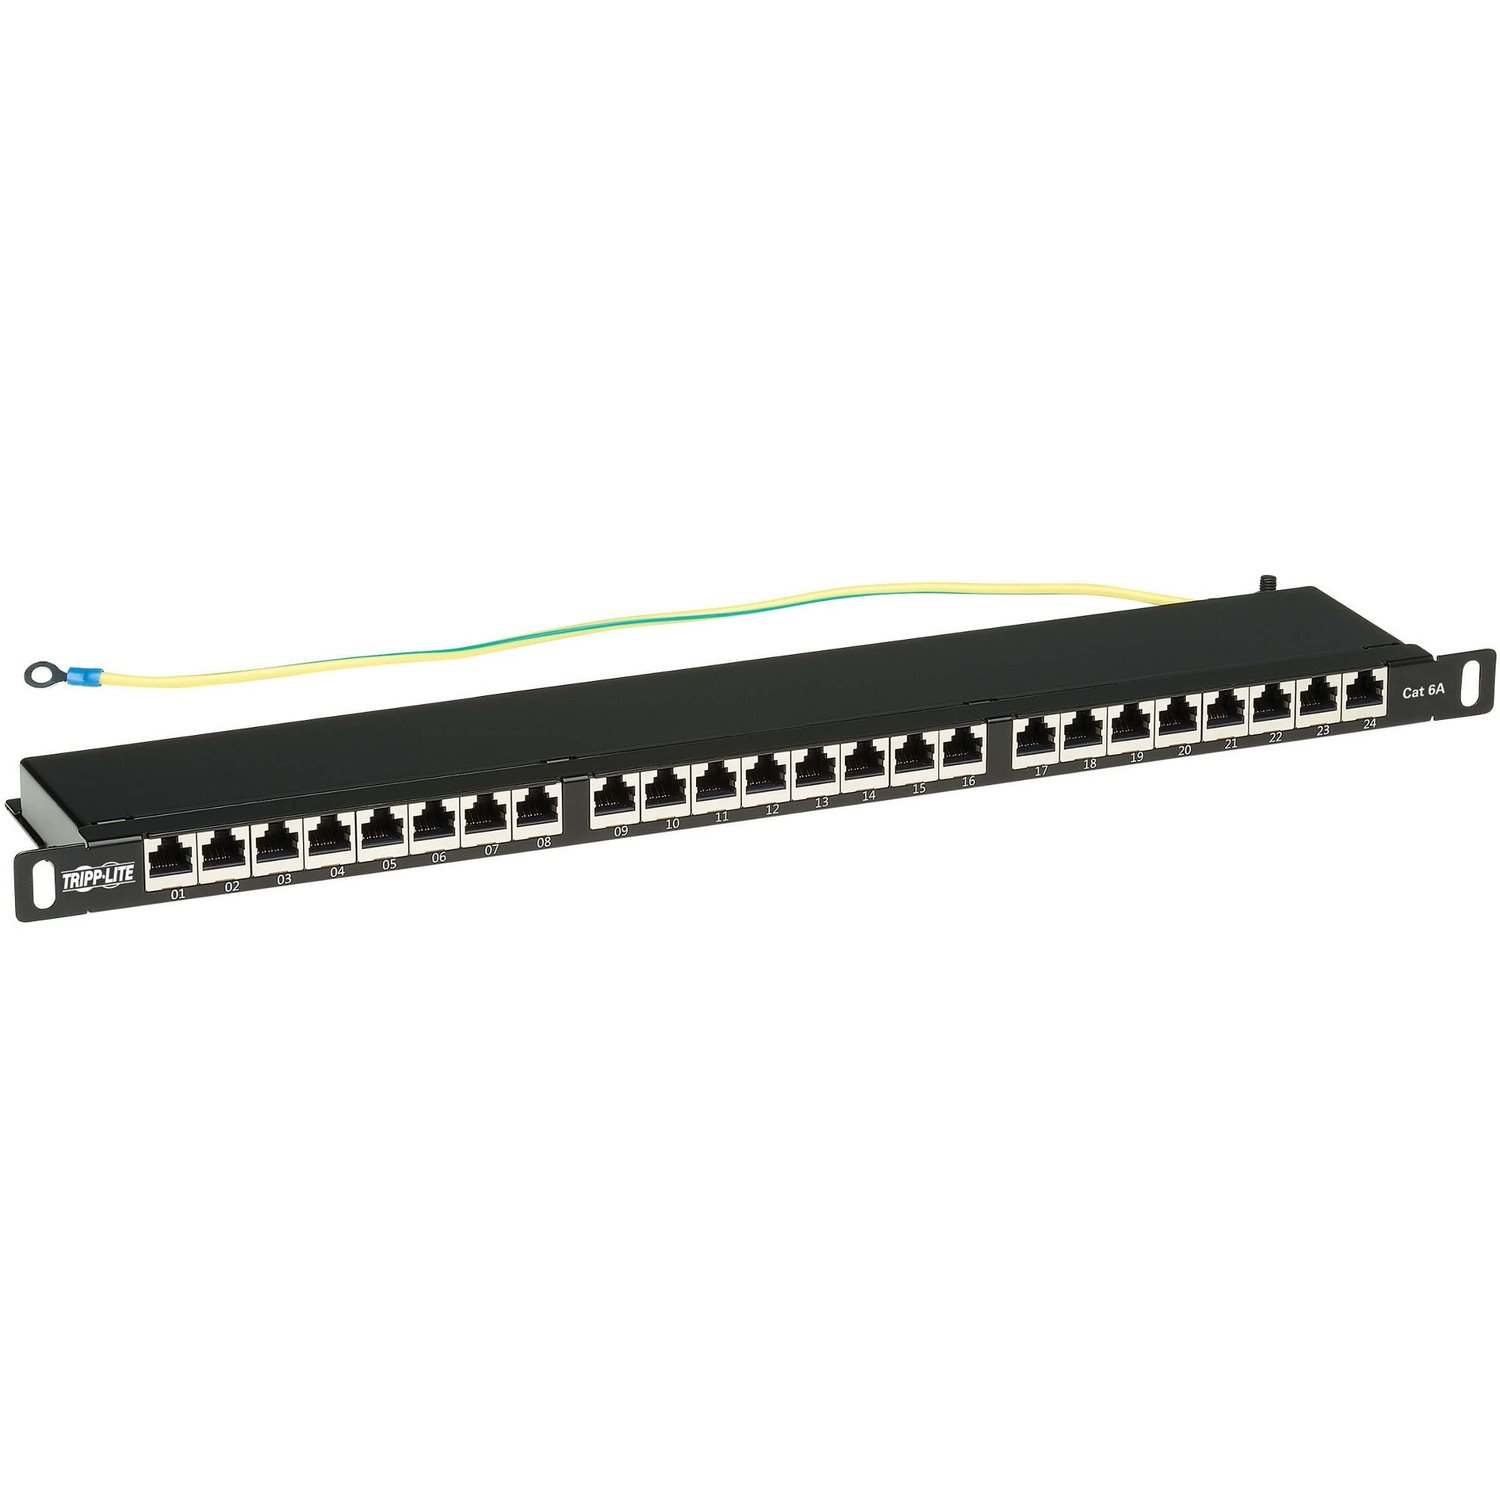 Tripp Lite by Eaton Cat6a 24-Port High-Density Shielded Patch Panel - Dual IDC, 568A/B, RJ45 Ethernet, 0.5U Rack-Mount